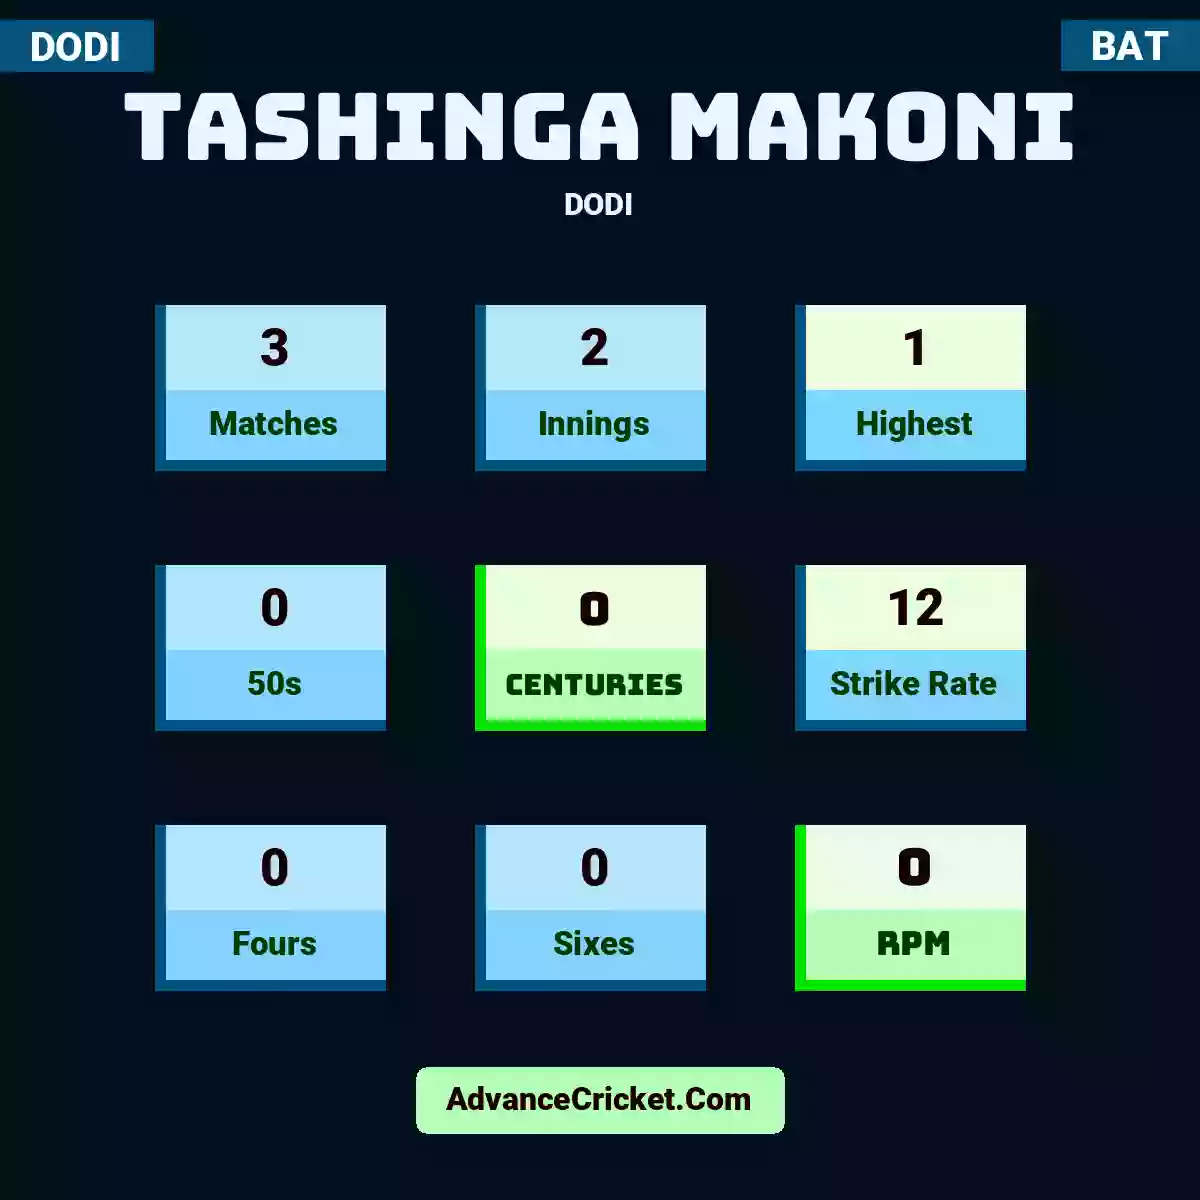 Tashinga Makoni DODI , Tashinga Makoni played 3 matches, scored 1 runs as highest, 0 half-centuries, and 0 centuries, with a strike rate of 12. T.Makoni hit 0 fours and 0 sixes, with an RPM of 0.